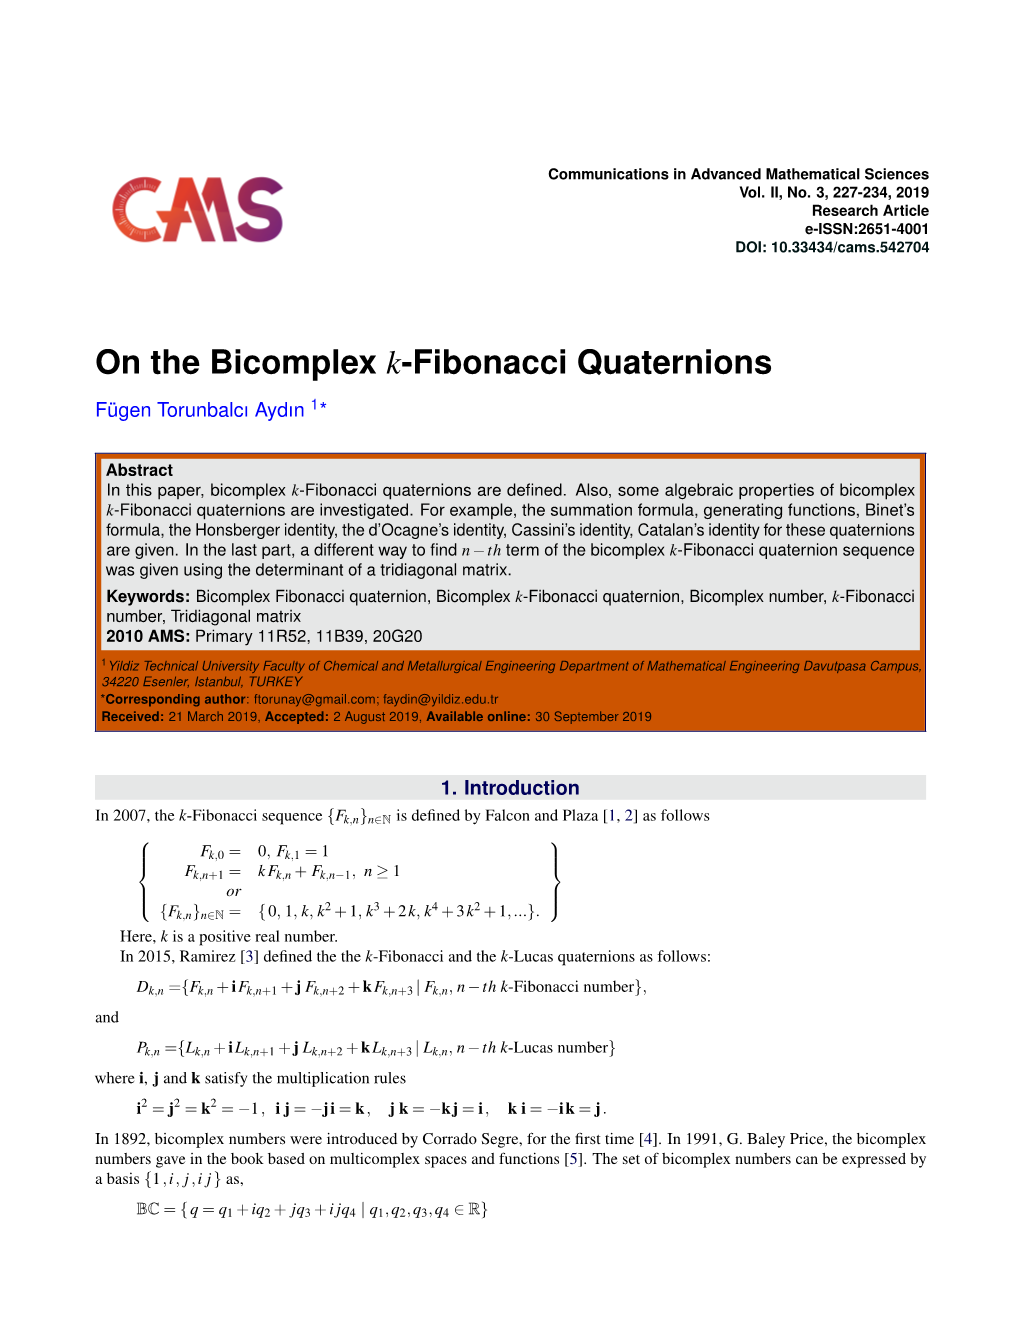 On the Bicomplex K-Fibonacci Quaternions